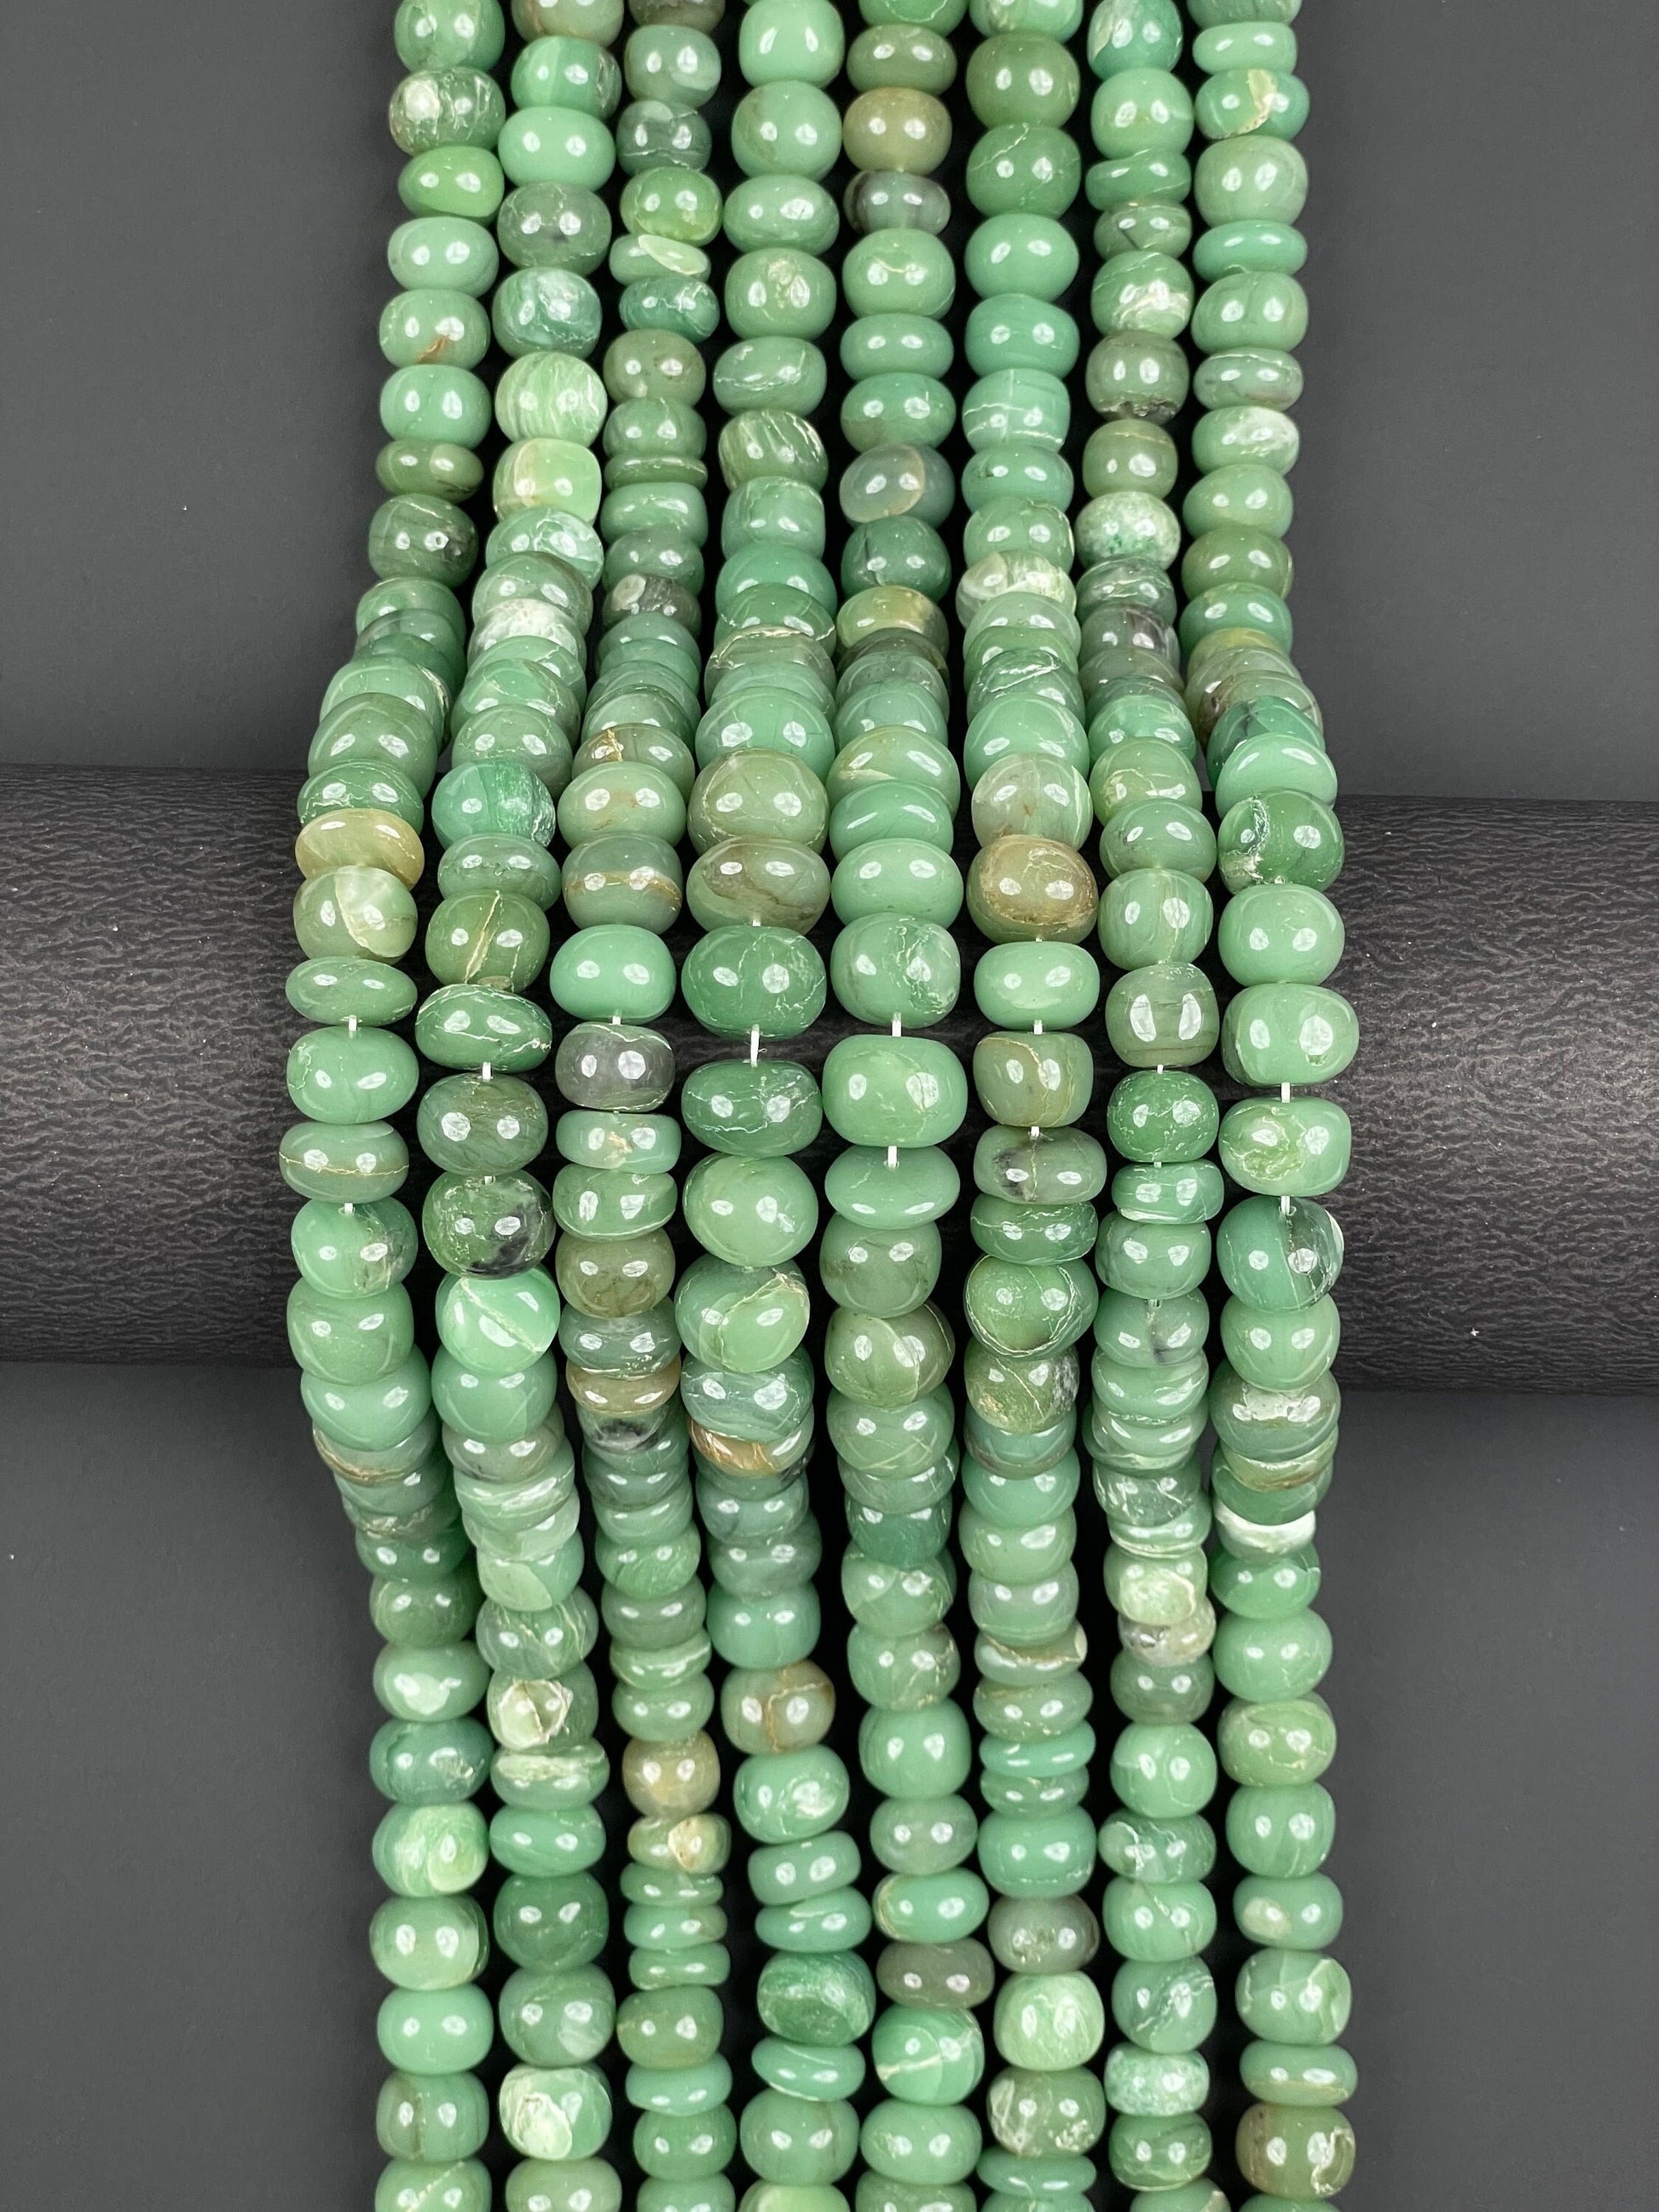  Green Aventurine Smooth Rondelle Beads